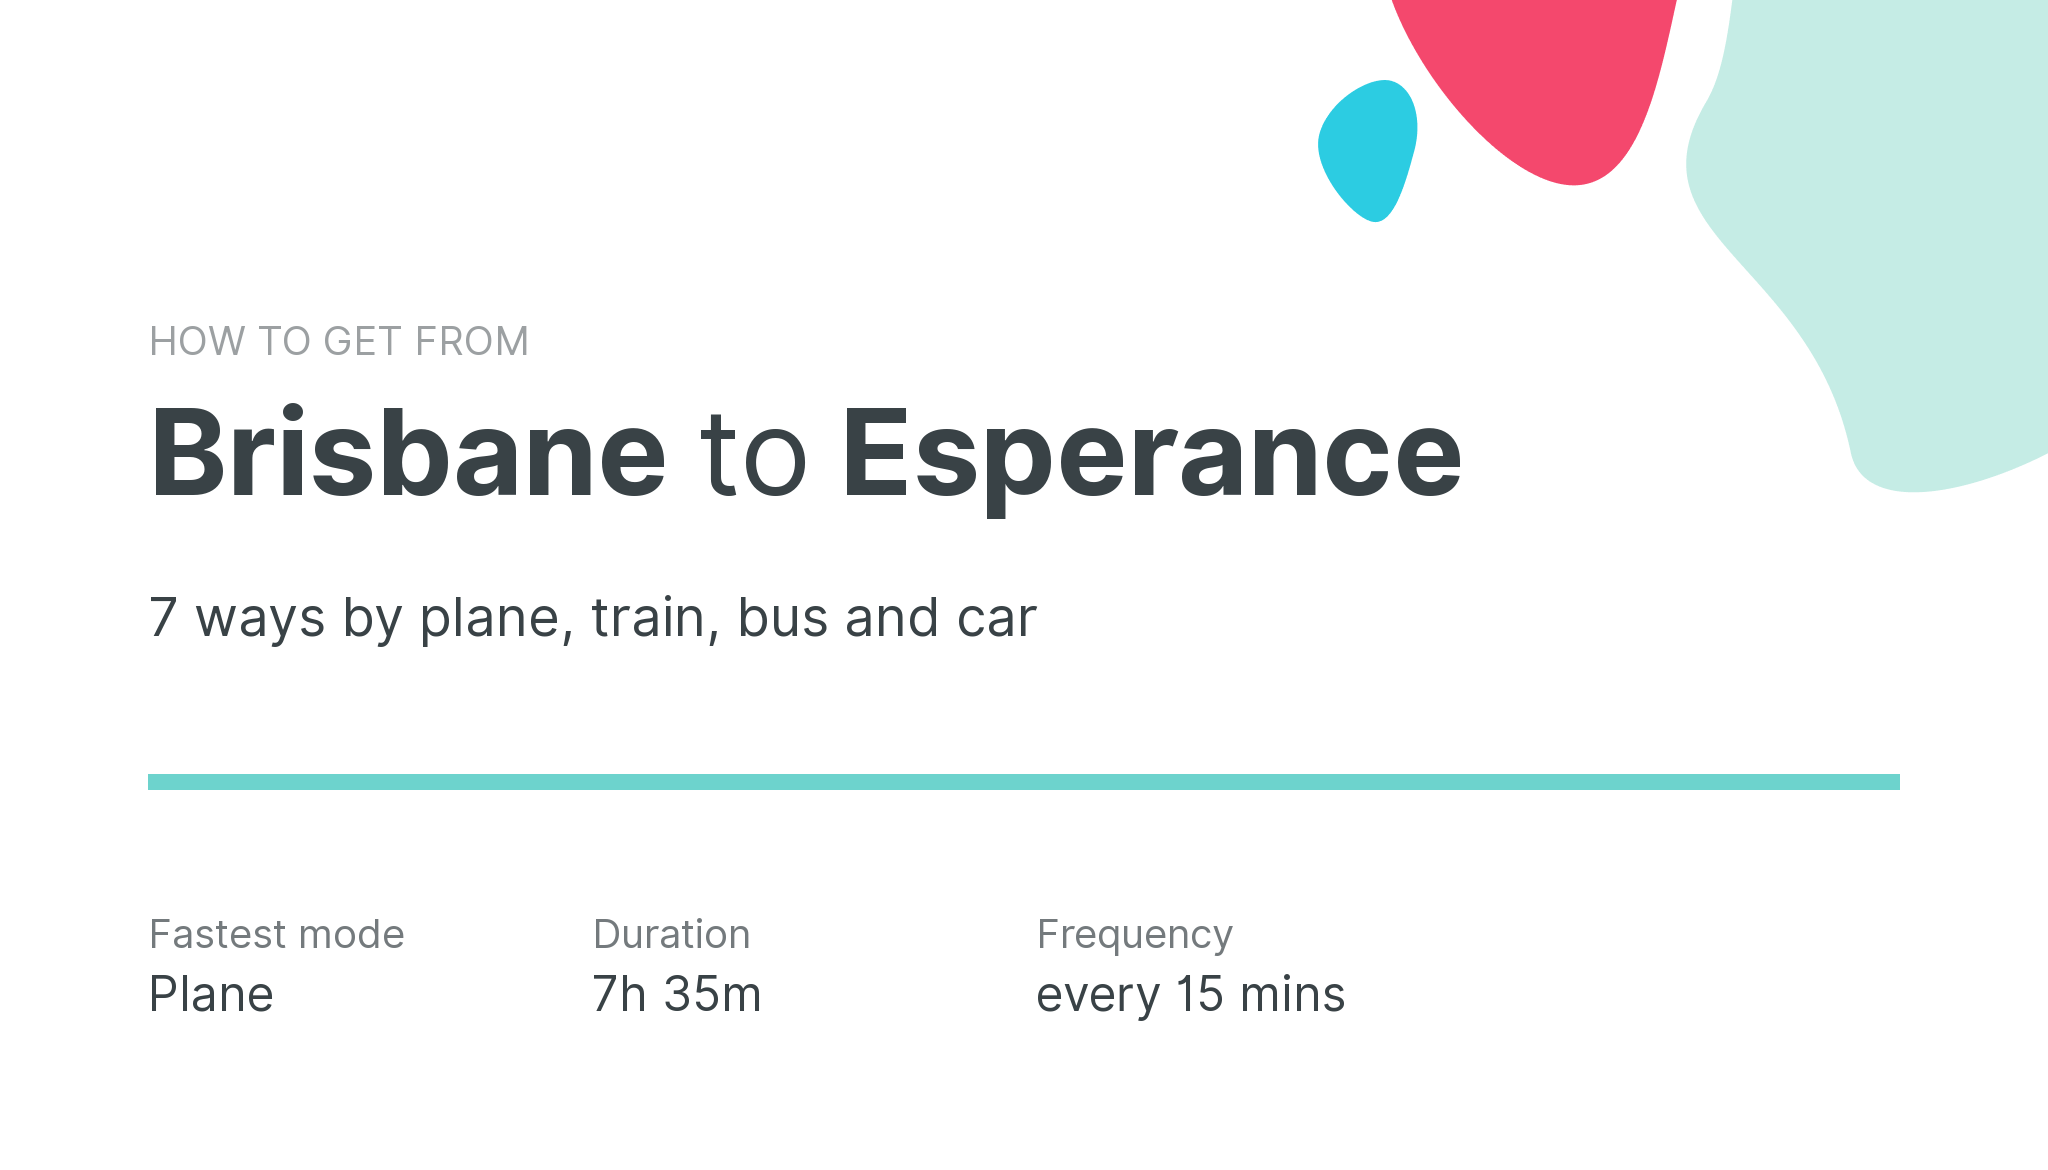 How do I get from Brisbane to Esperance